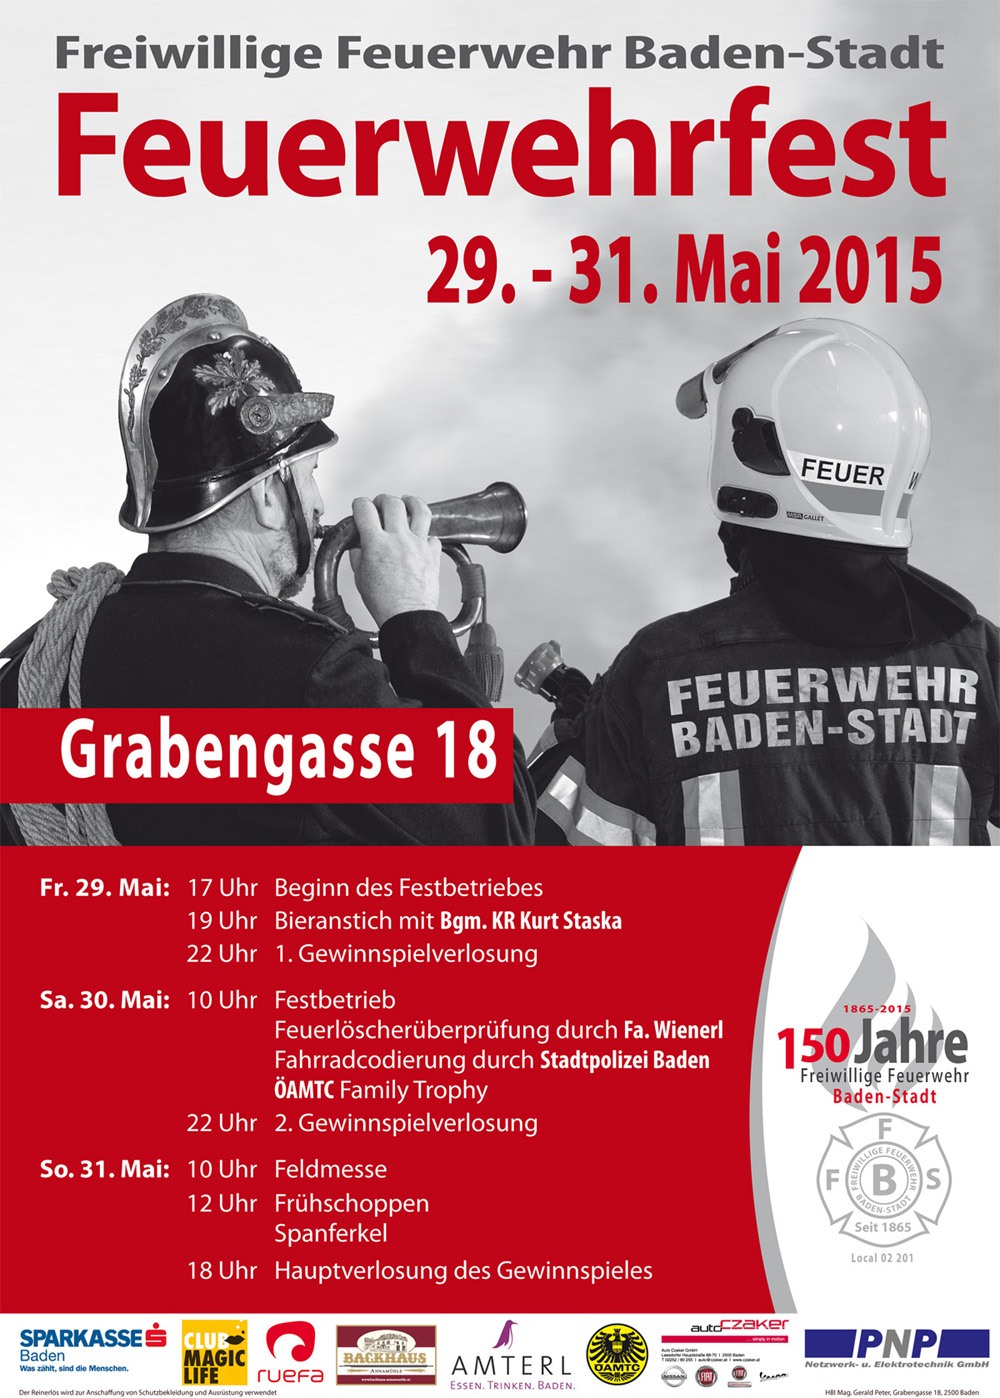 2015 Feuerwehrfest - Freiw. Feuerwehr Baden-Stadt 29. - 31.05.2015